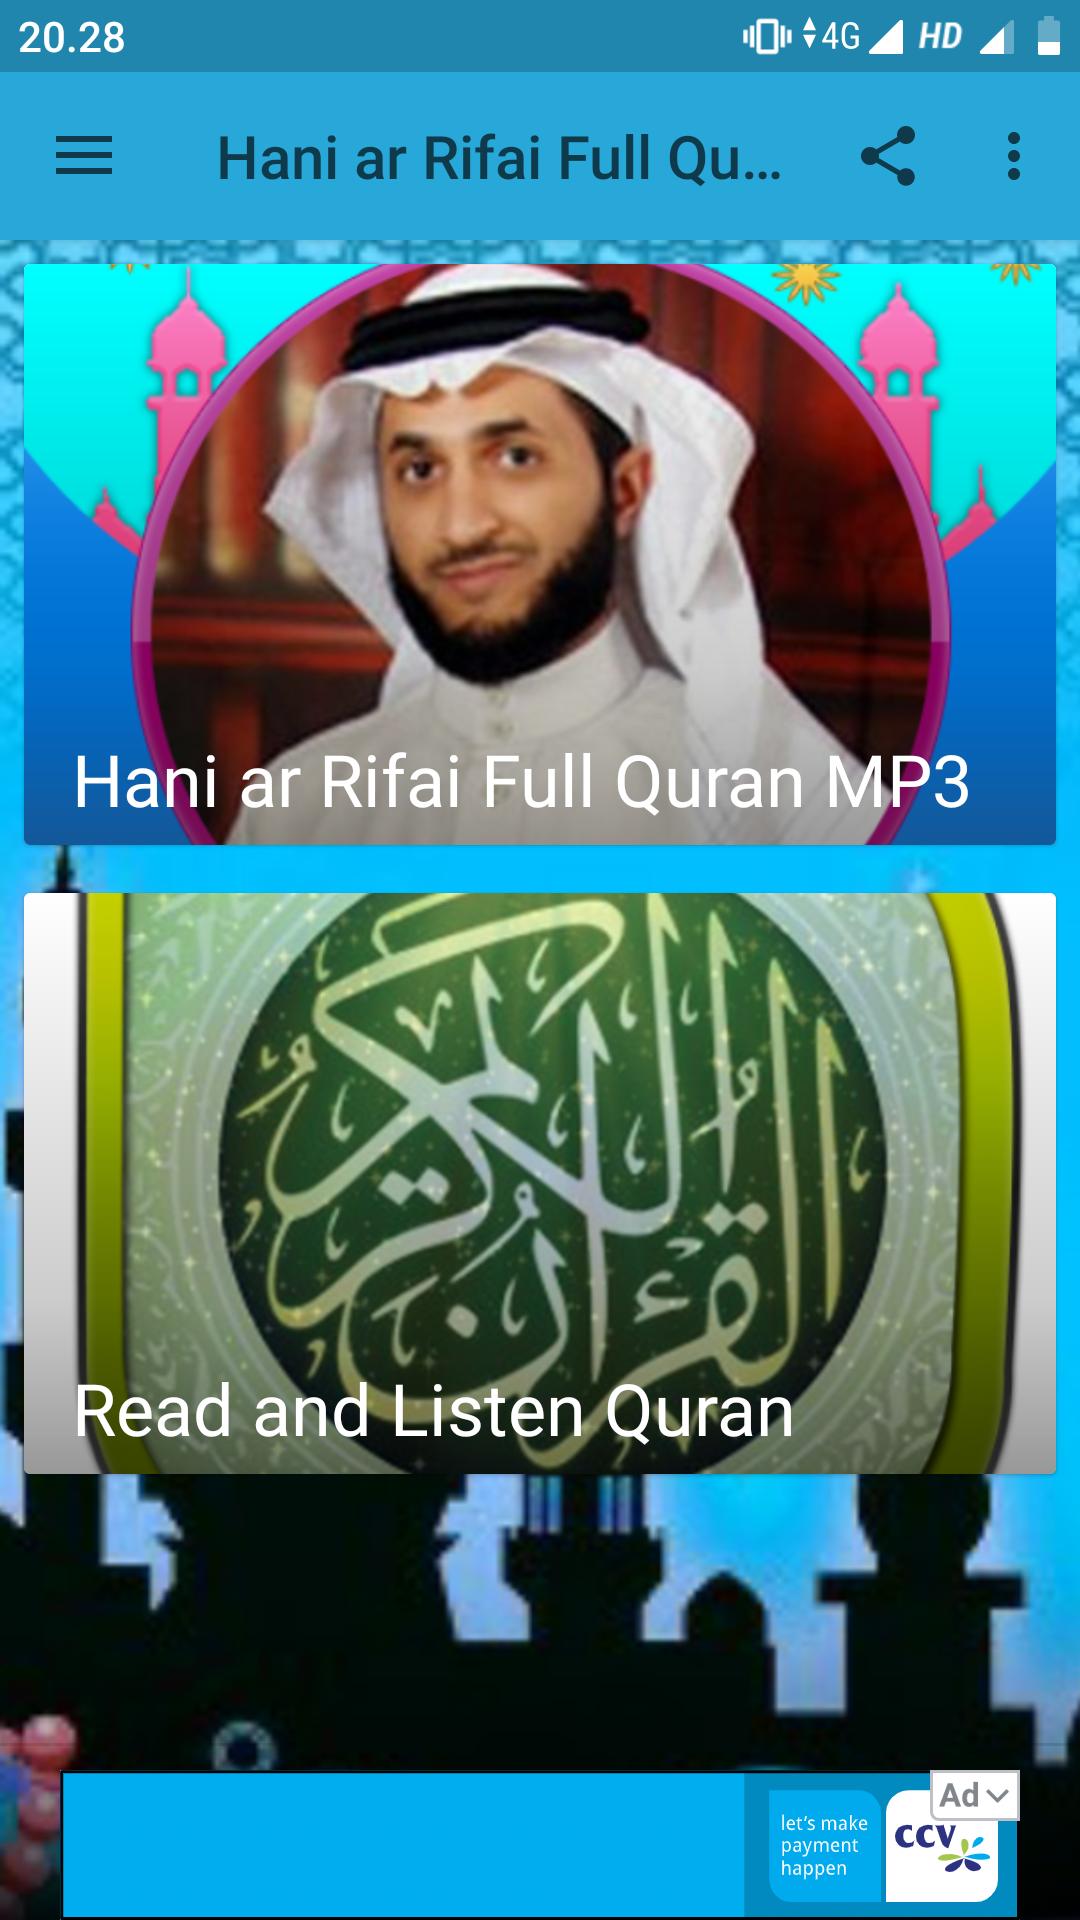 Hani Ar Rifai Quran Mp3 Full 30 Juz for Android - APK Download